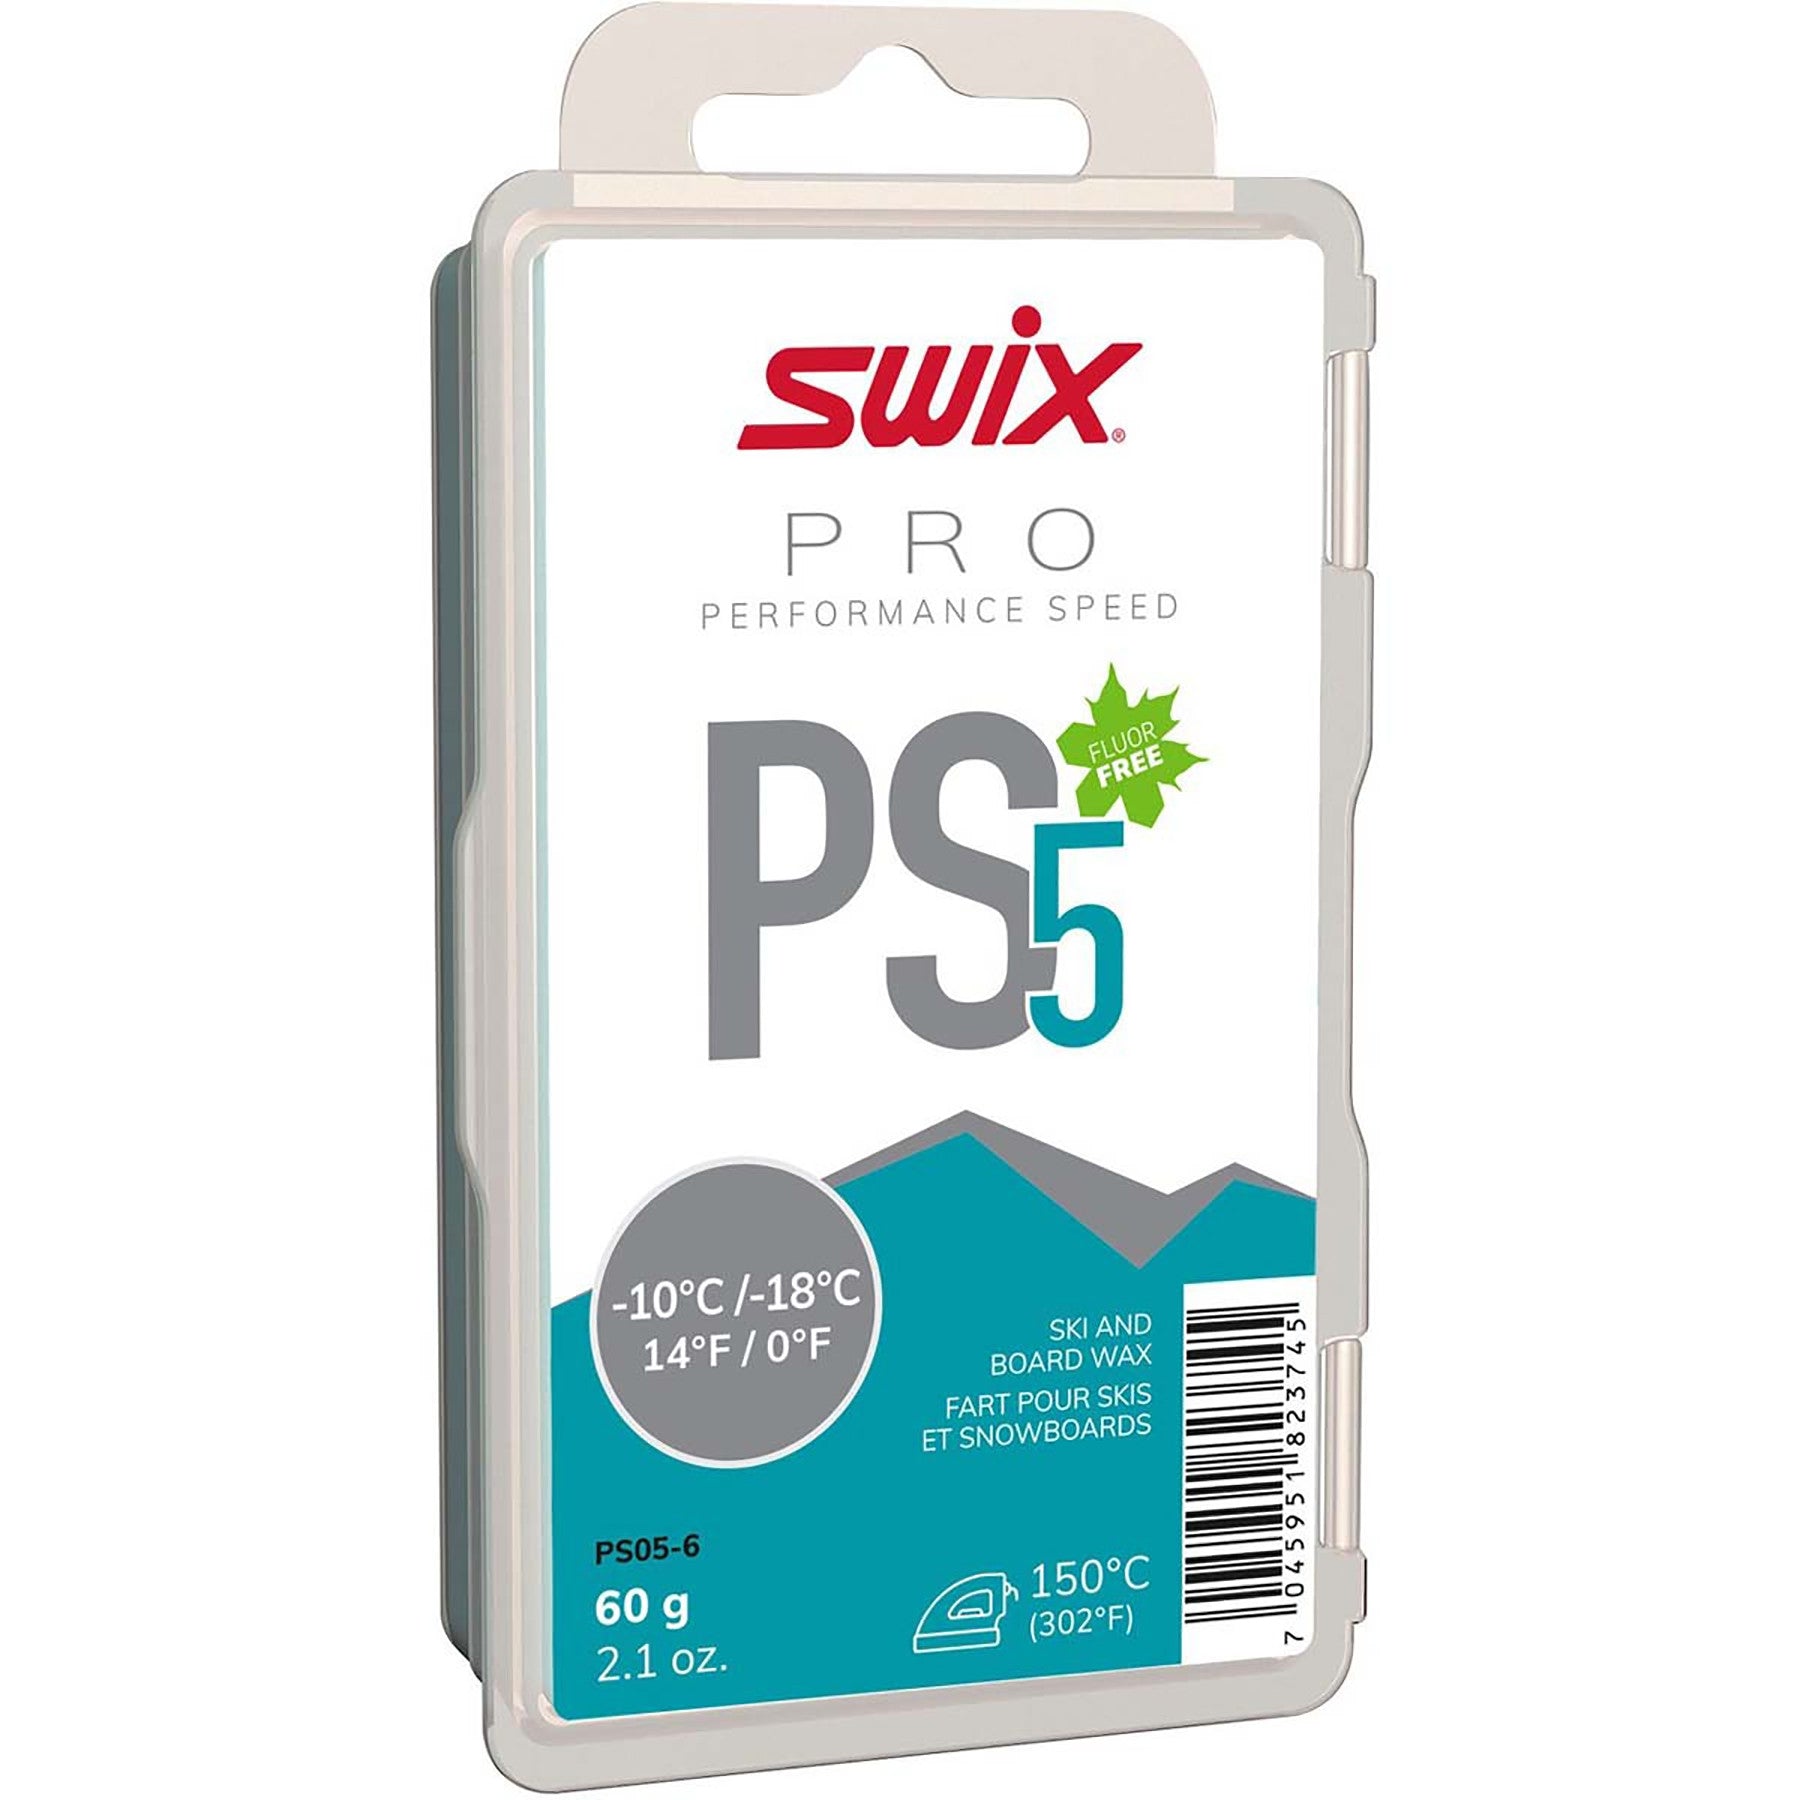 Swix PS Performance Speed Glide Wax 60g-6